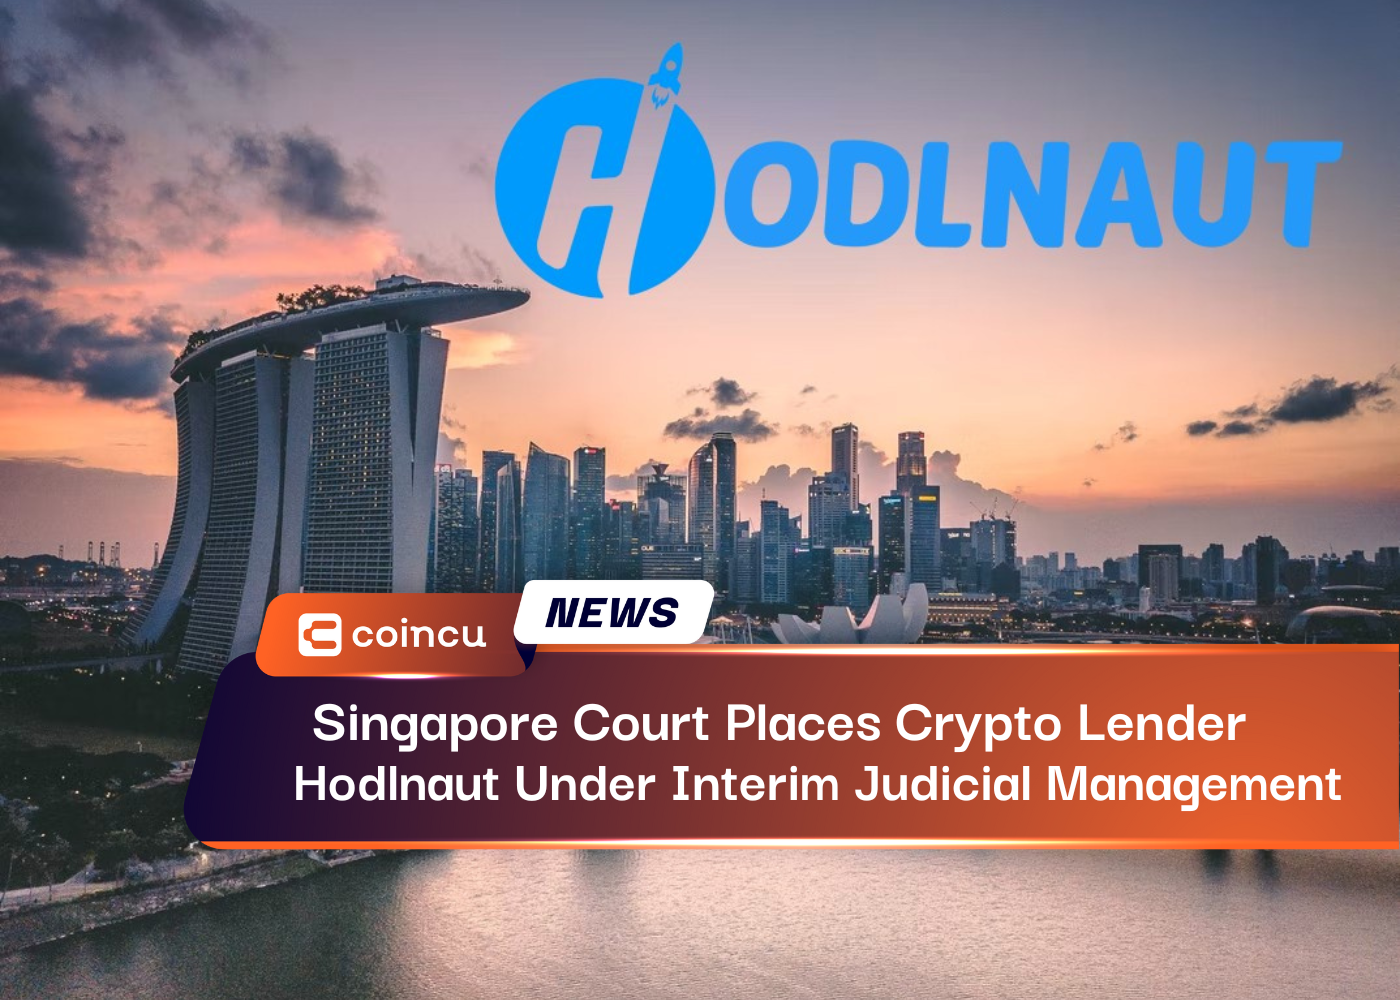 Hodlnaut Under Interim Judicial Management